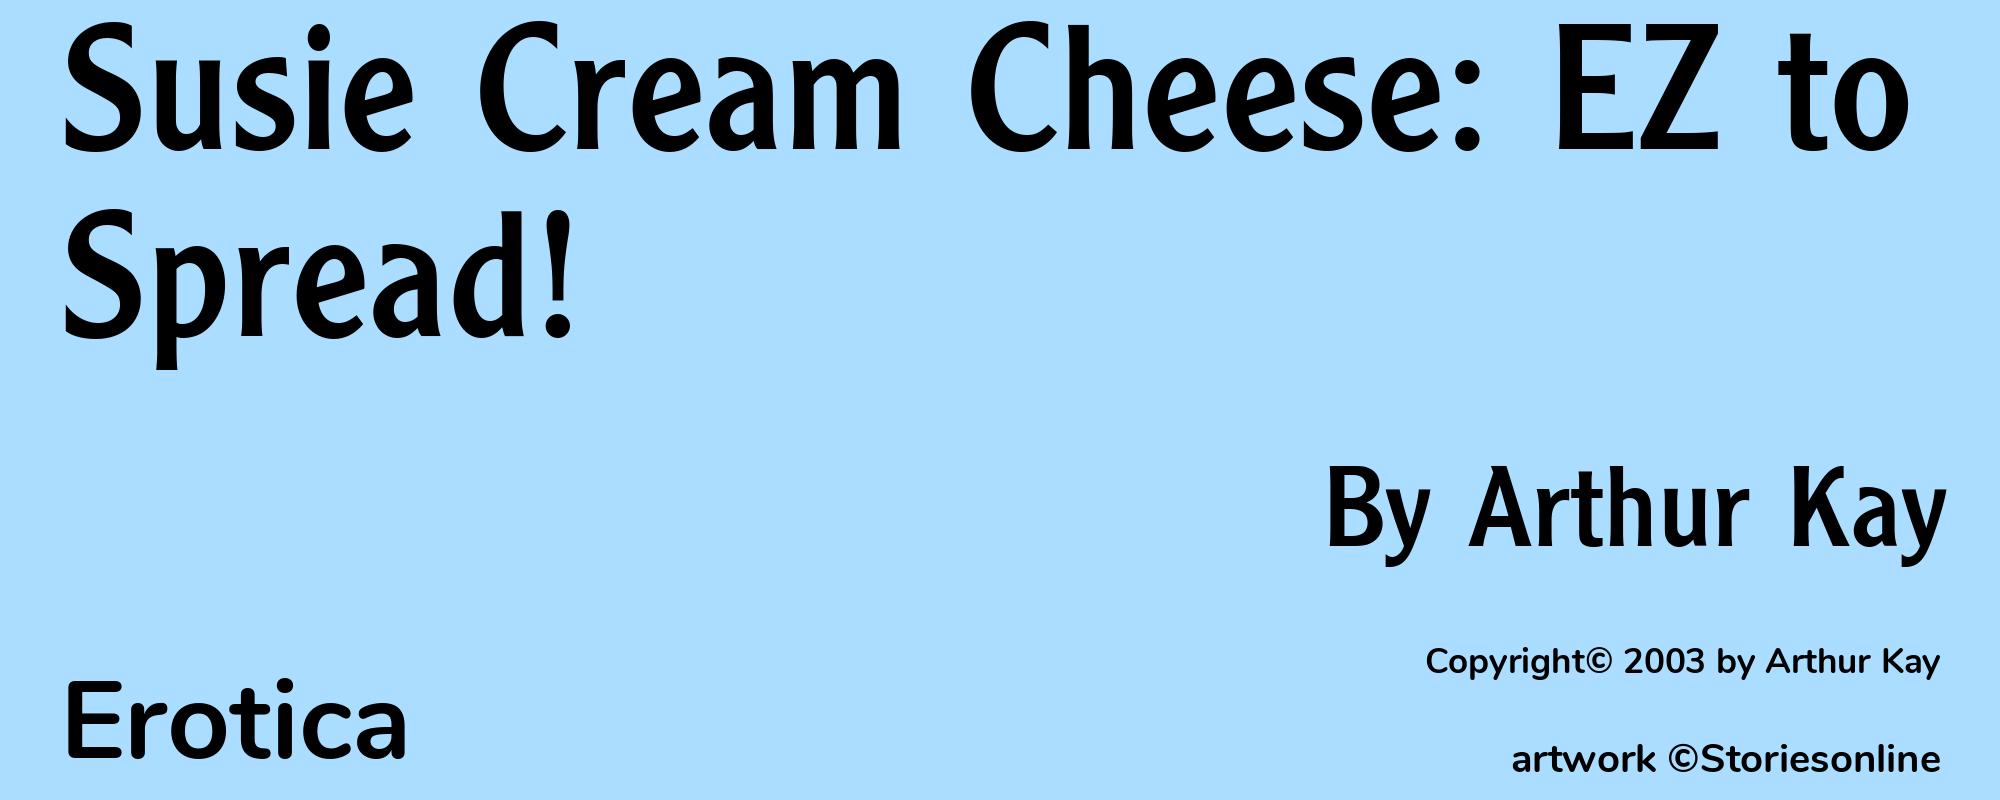 Susie Cream Cheese: EZ to Spread! - Cover